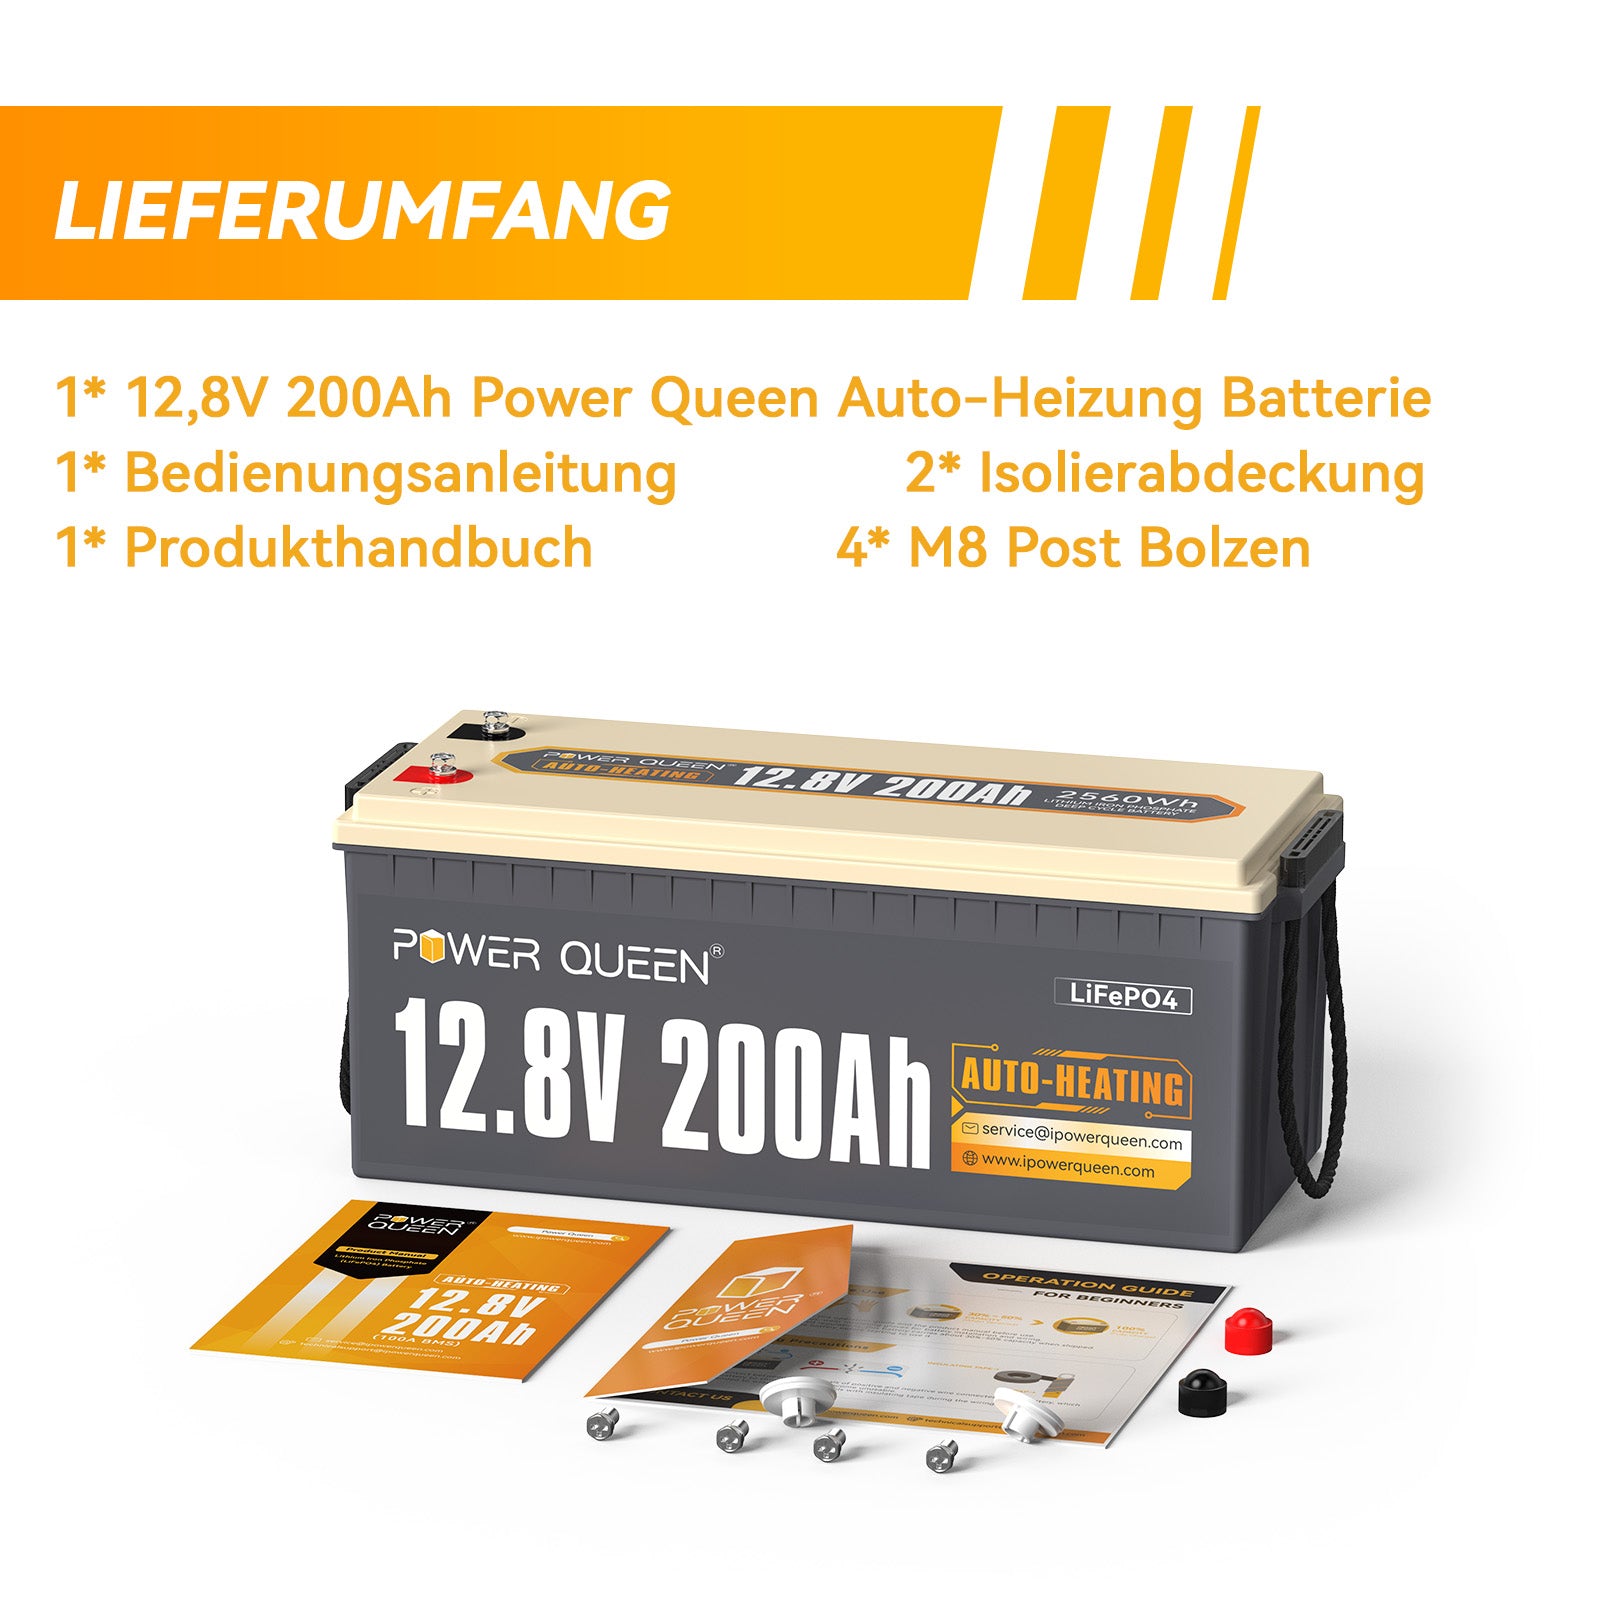 【0% IVA】Batteria LiFePO4 autoriscaldante Power Queen 12,8 V 200 Ah, BMS 100 A integrato